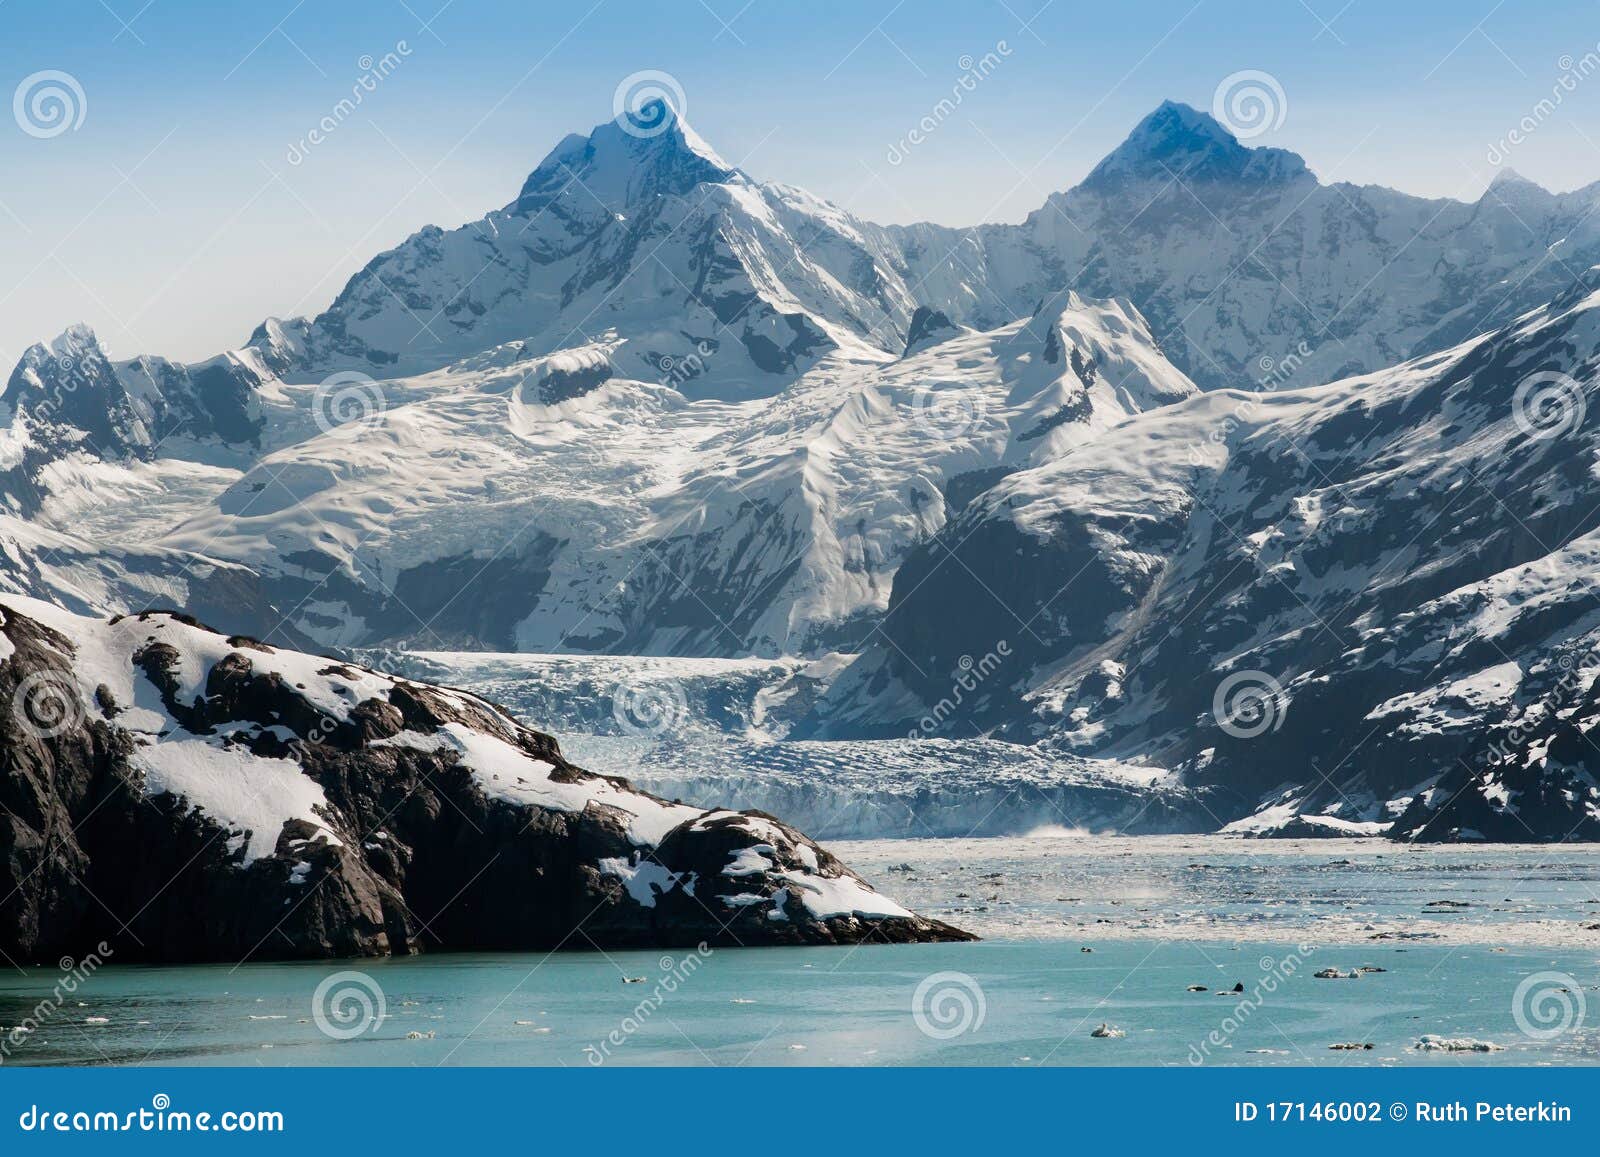 glacier bay national park